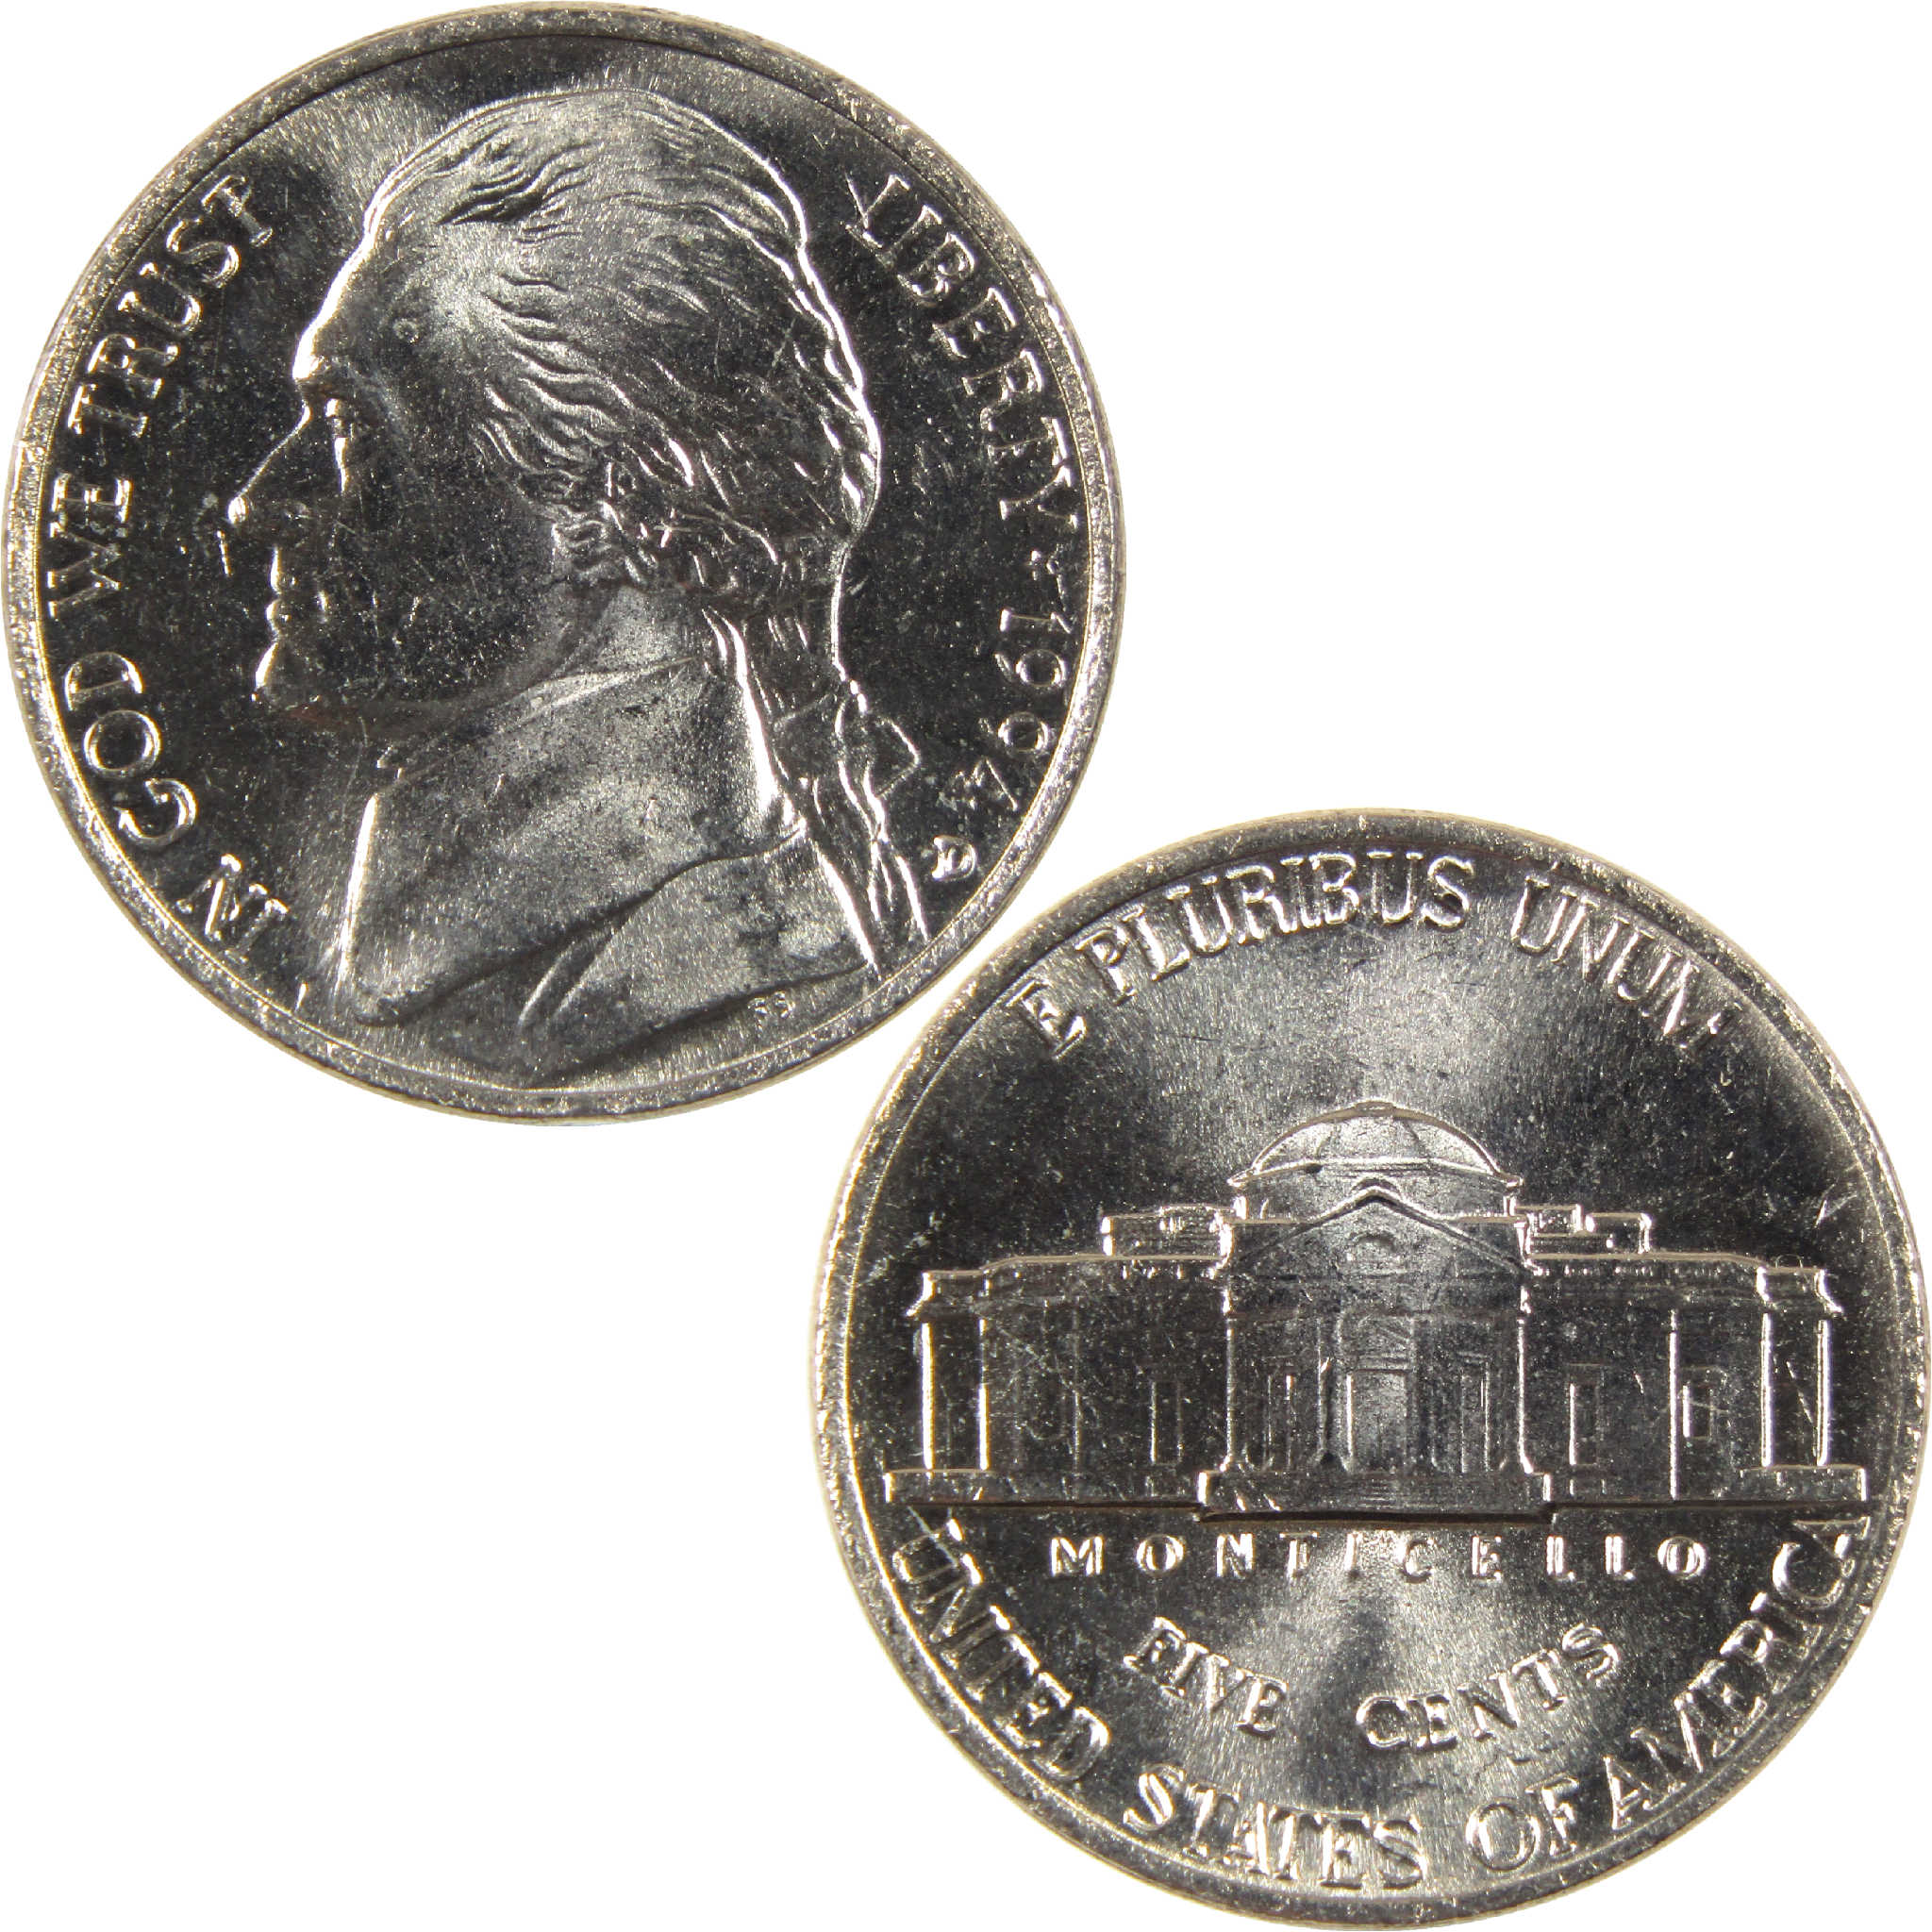 1994 D Jefferson Nickel BU Uncirculated 5c Coin